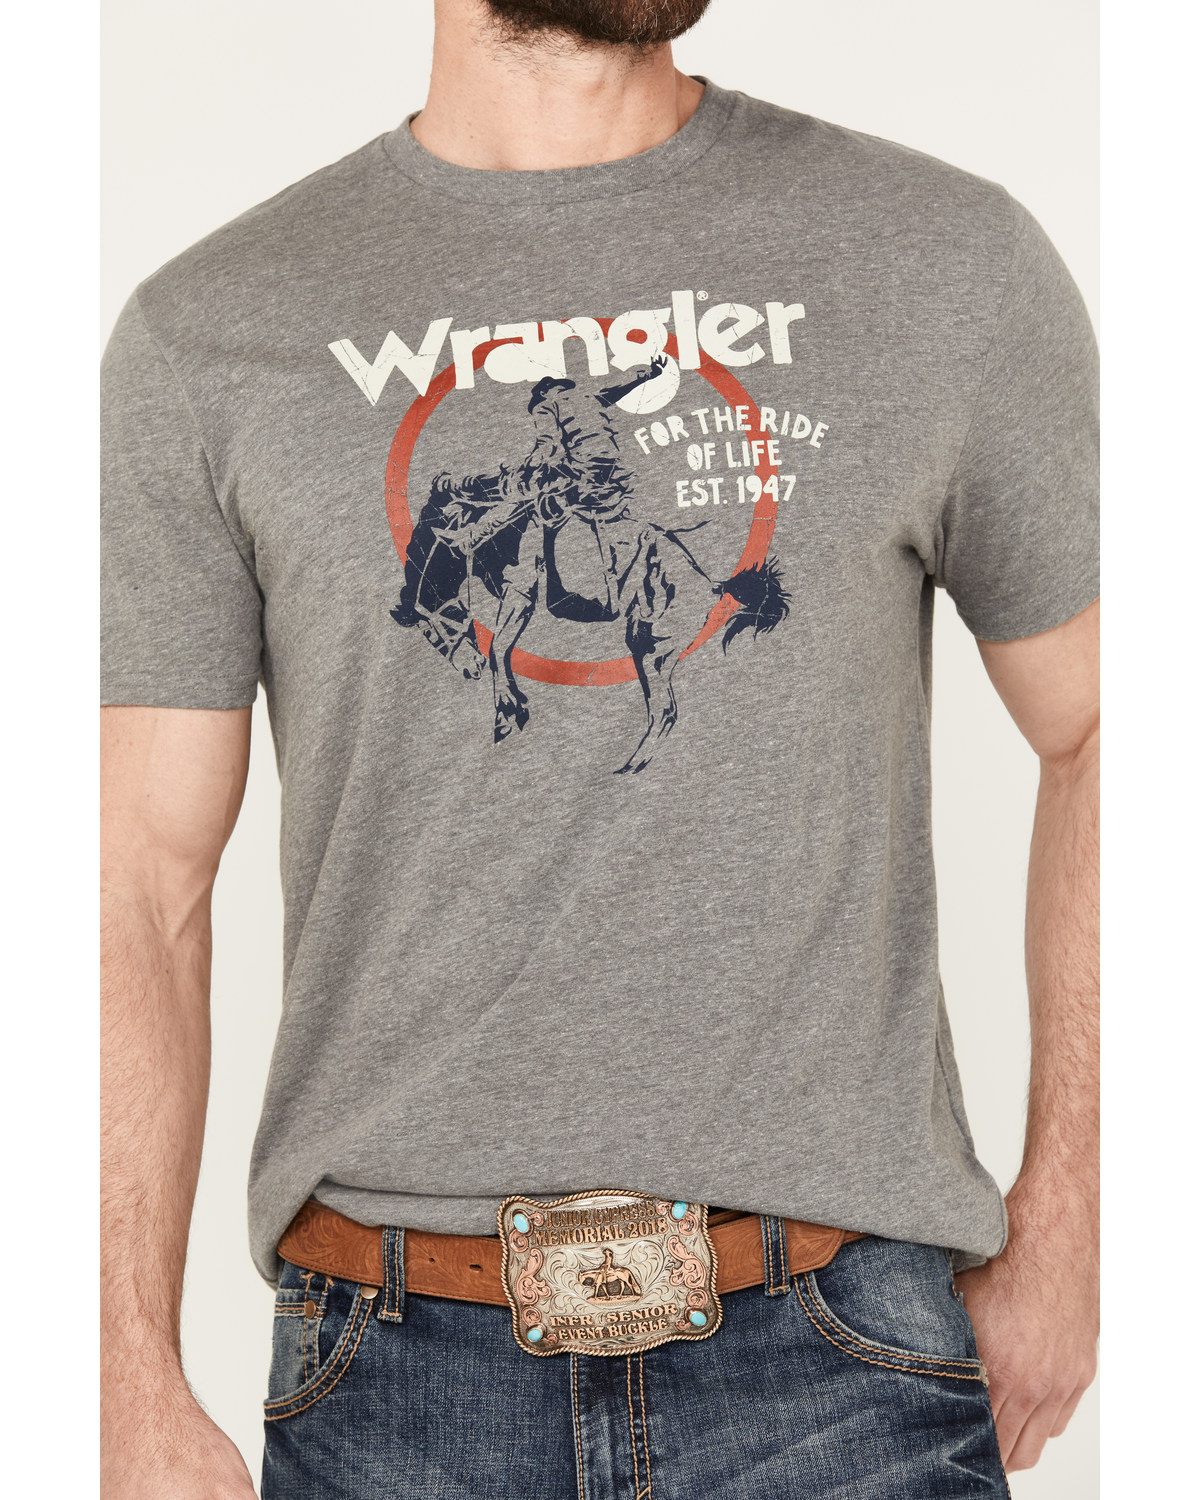 Wrangler Men's Boot Barn Exclusive Ride of Life Short Sleeve Graphic T-Shirt